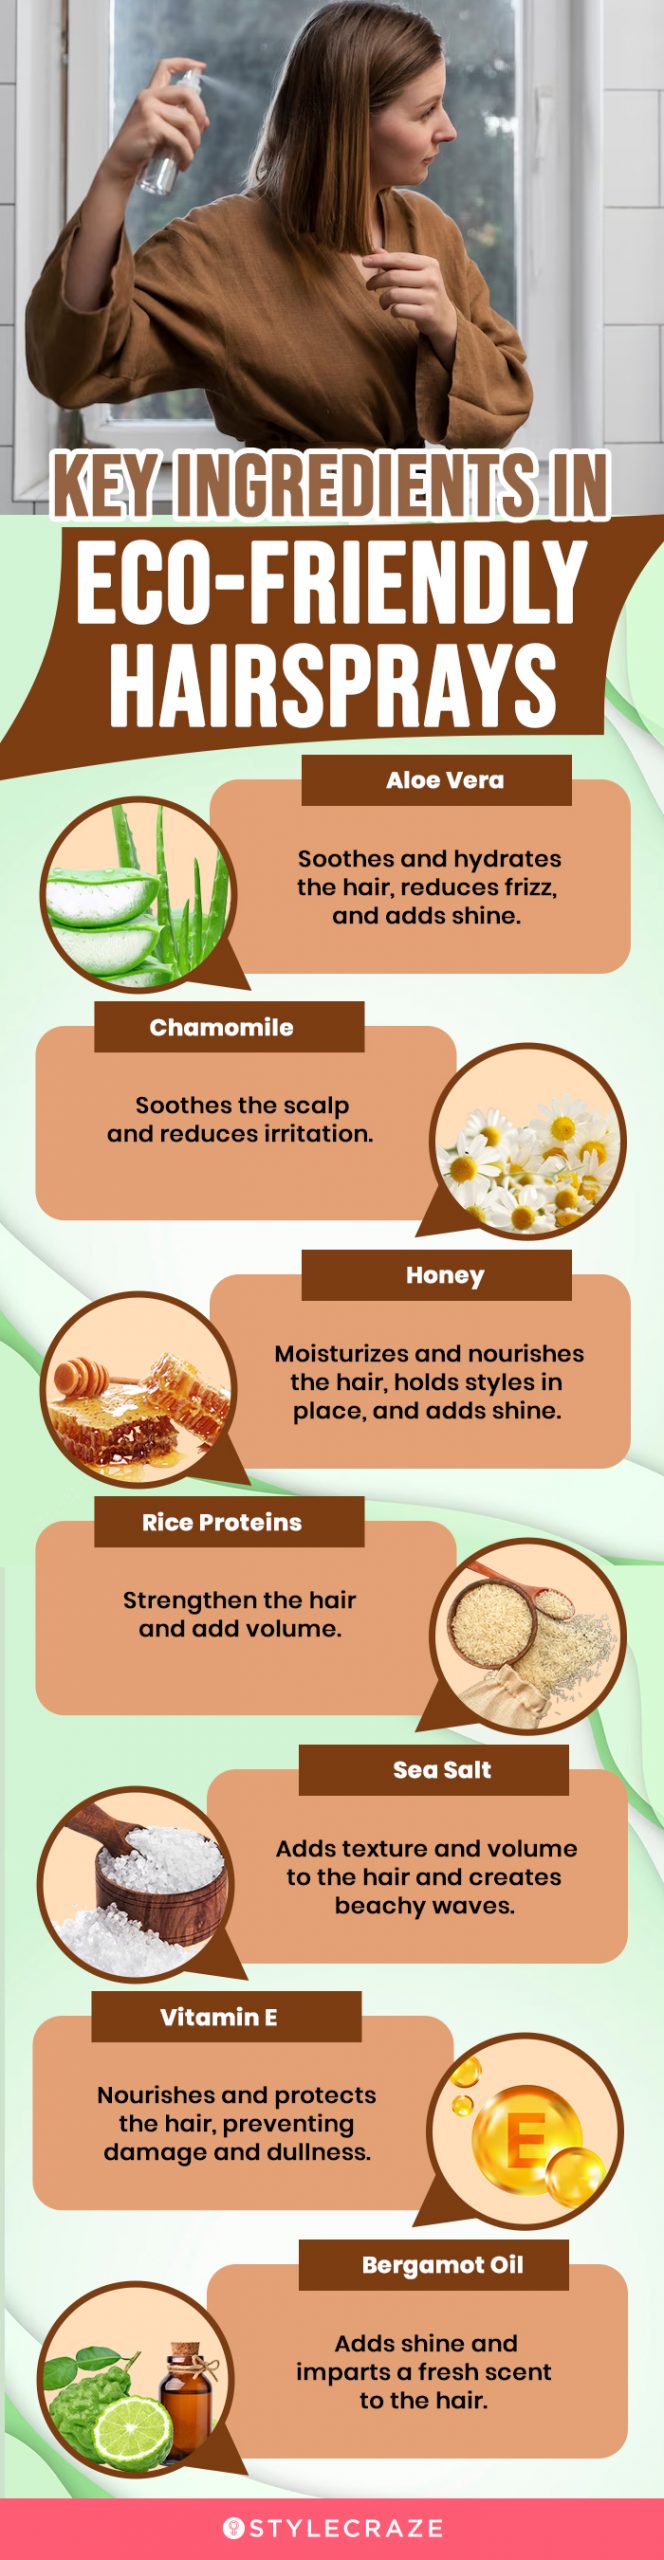 Key Ingredients In Eco-Friendly Hairsprays (infographic)